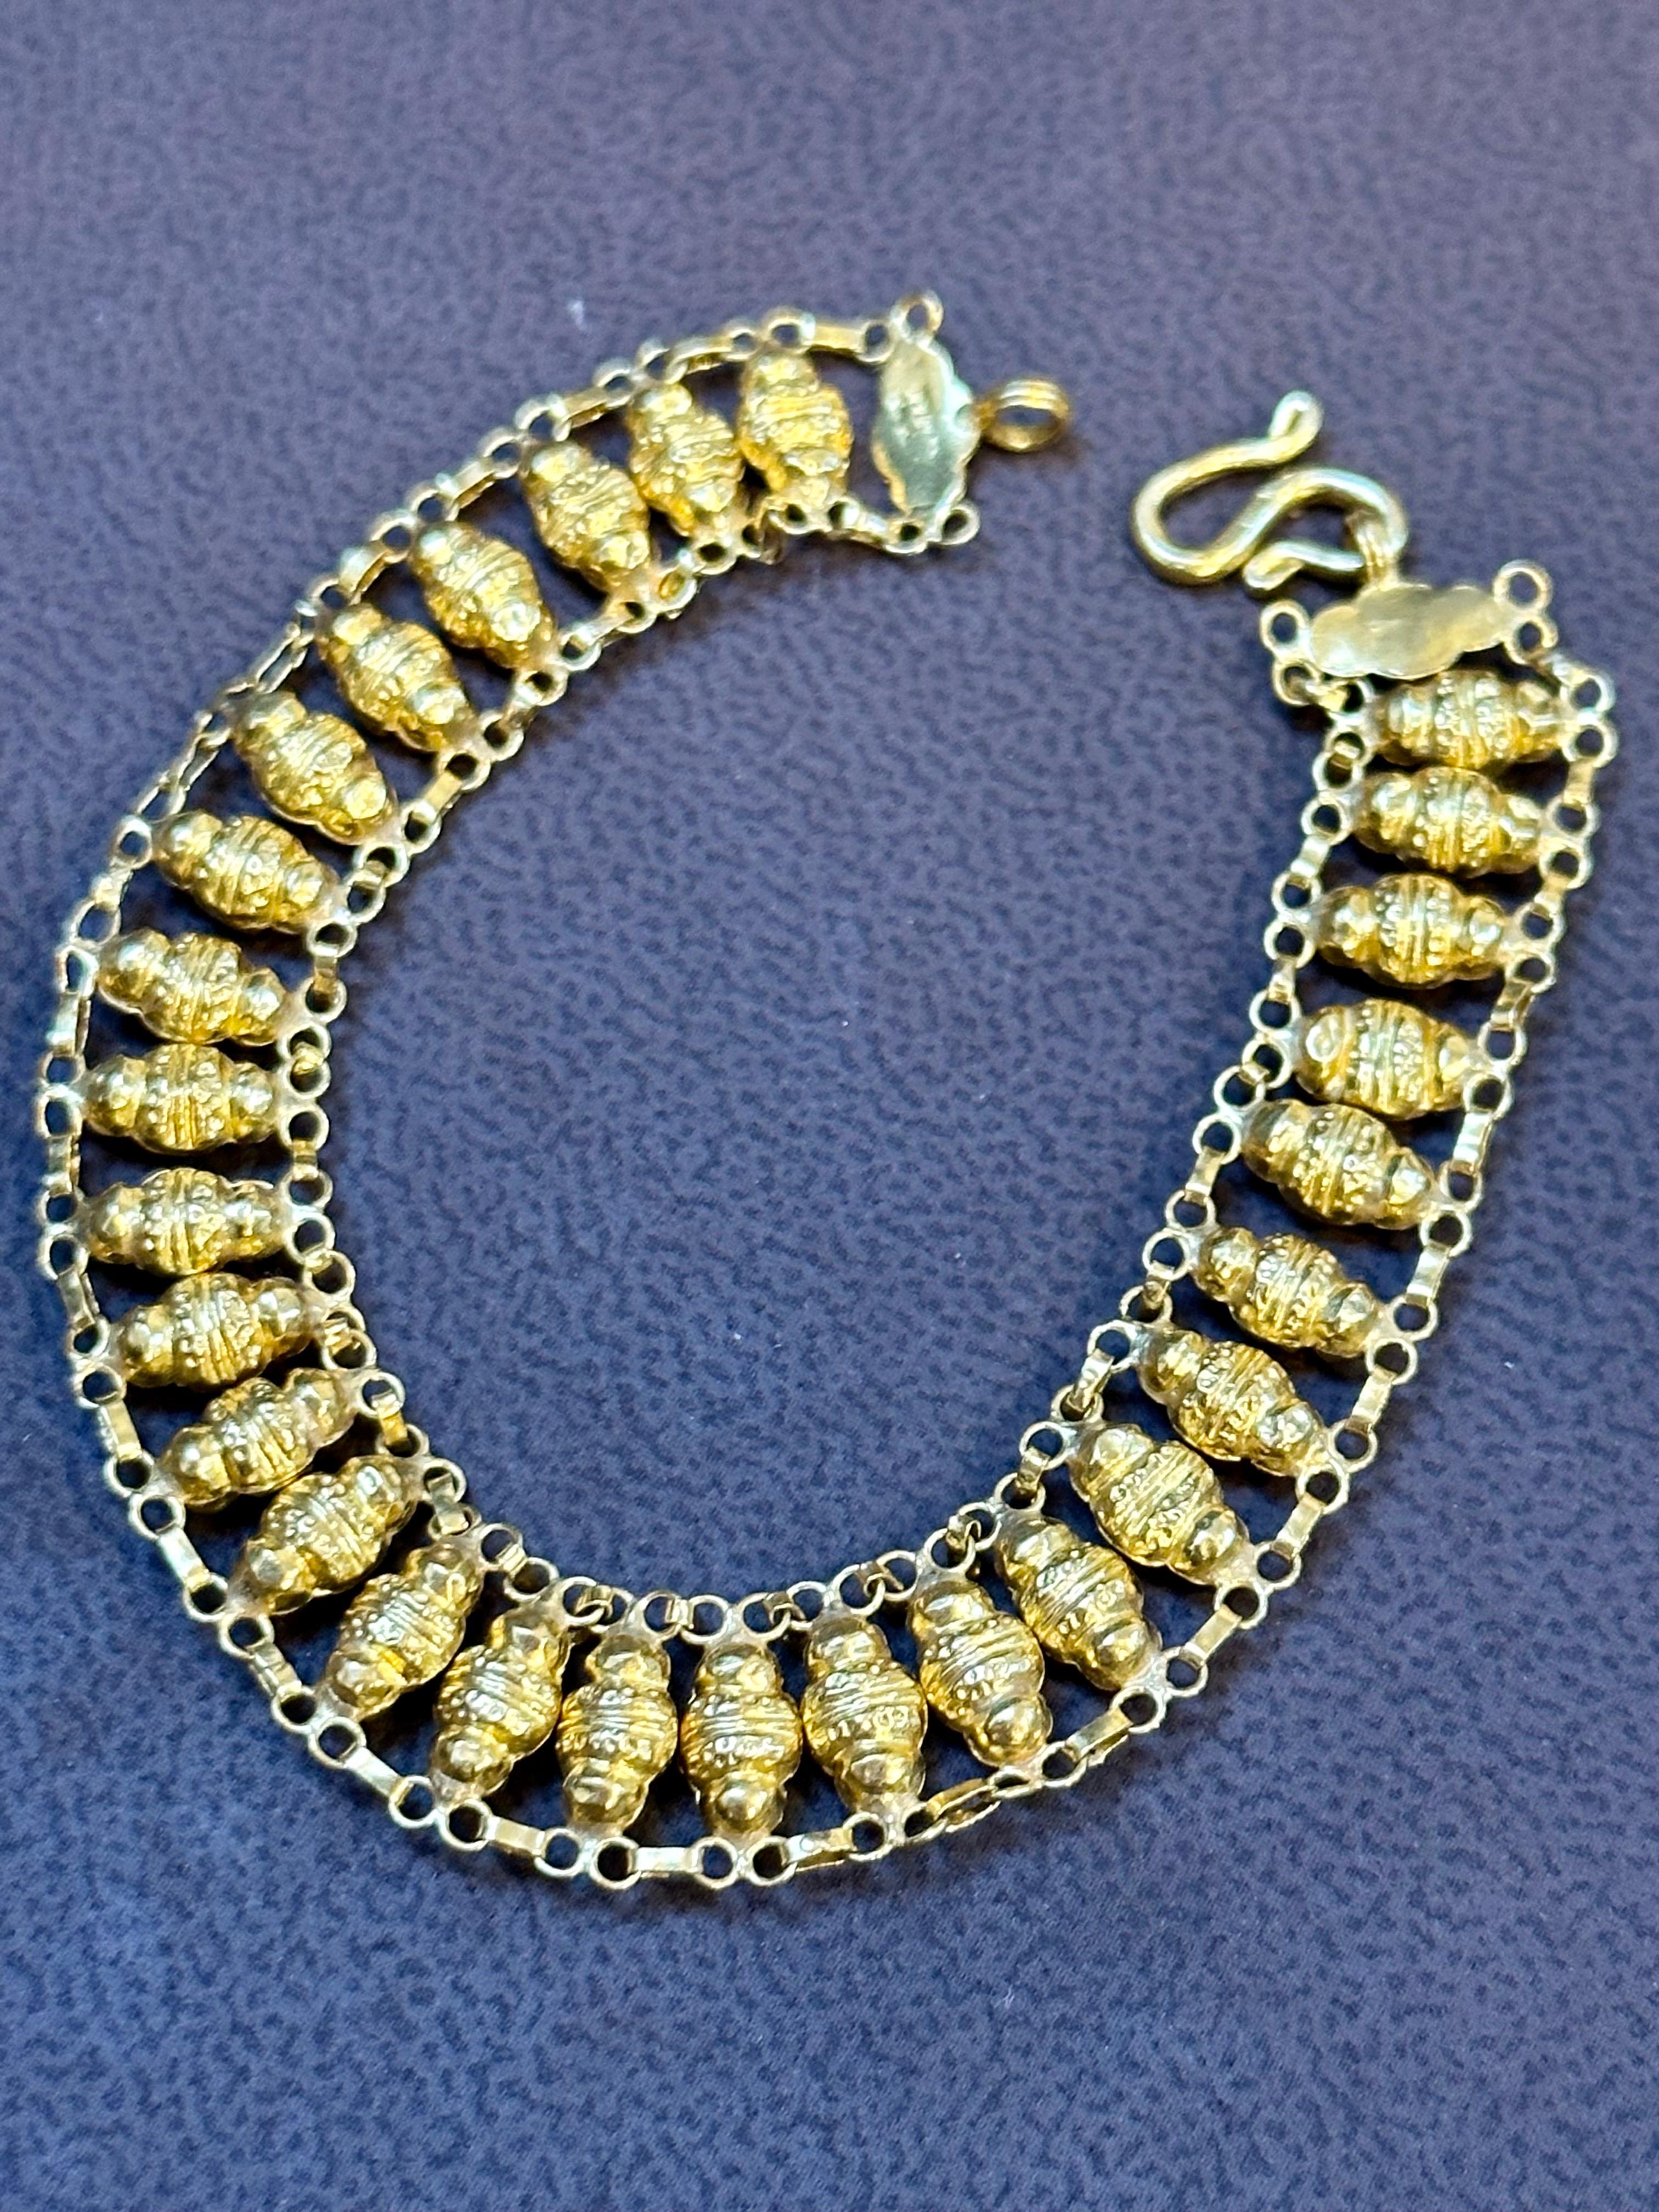 22 Karat Yellow Gold 7.6 Gm Link Bracelet Unisex 1